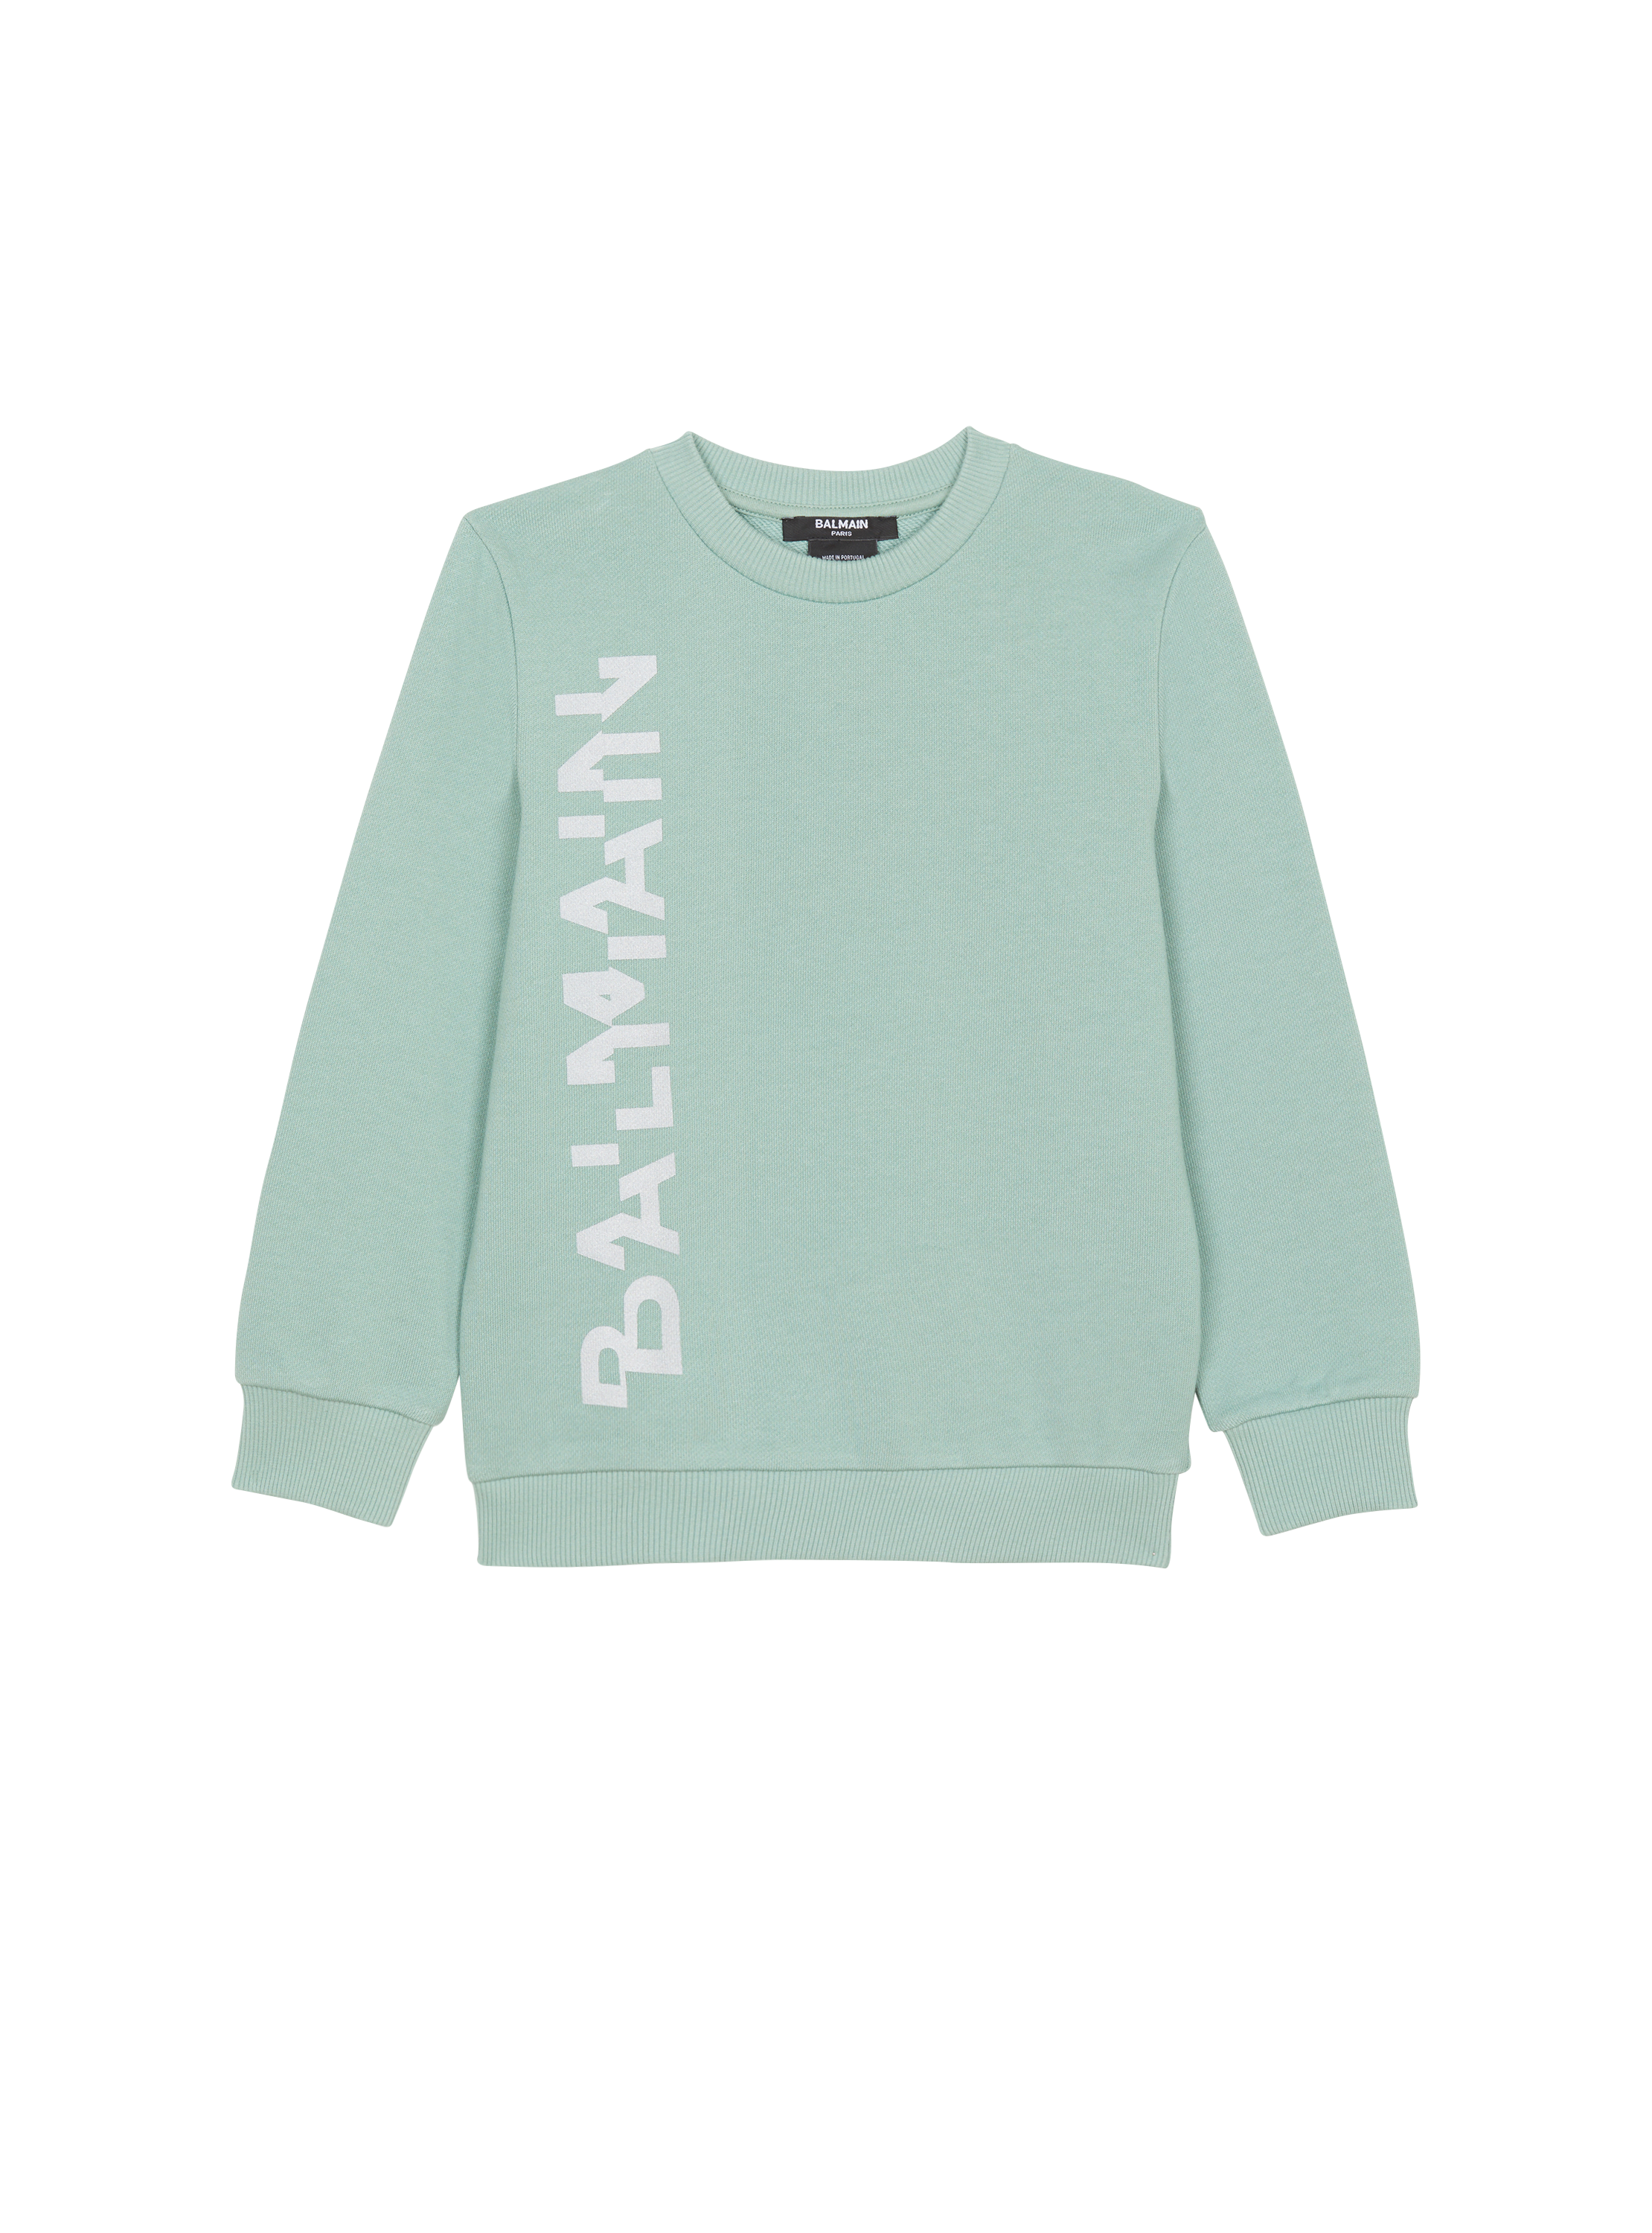 Sweatshirt with glittery Balmain logo